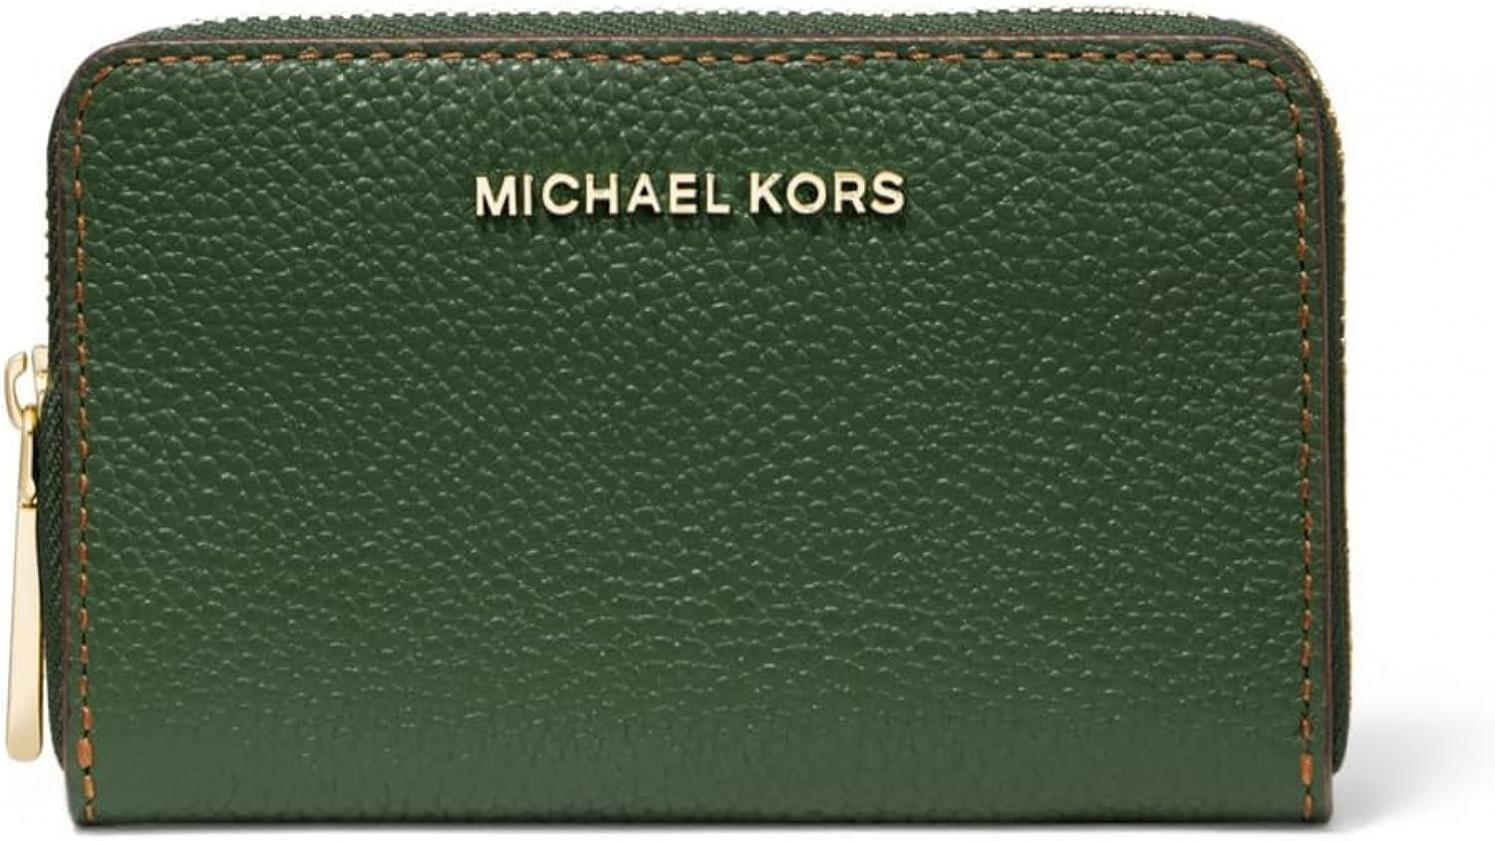 Michael Kors Jet Set Small Zip Around Card Case Amazon Green One Size